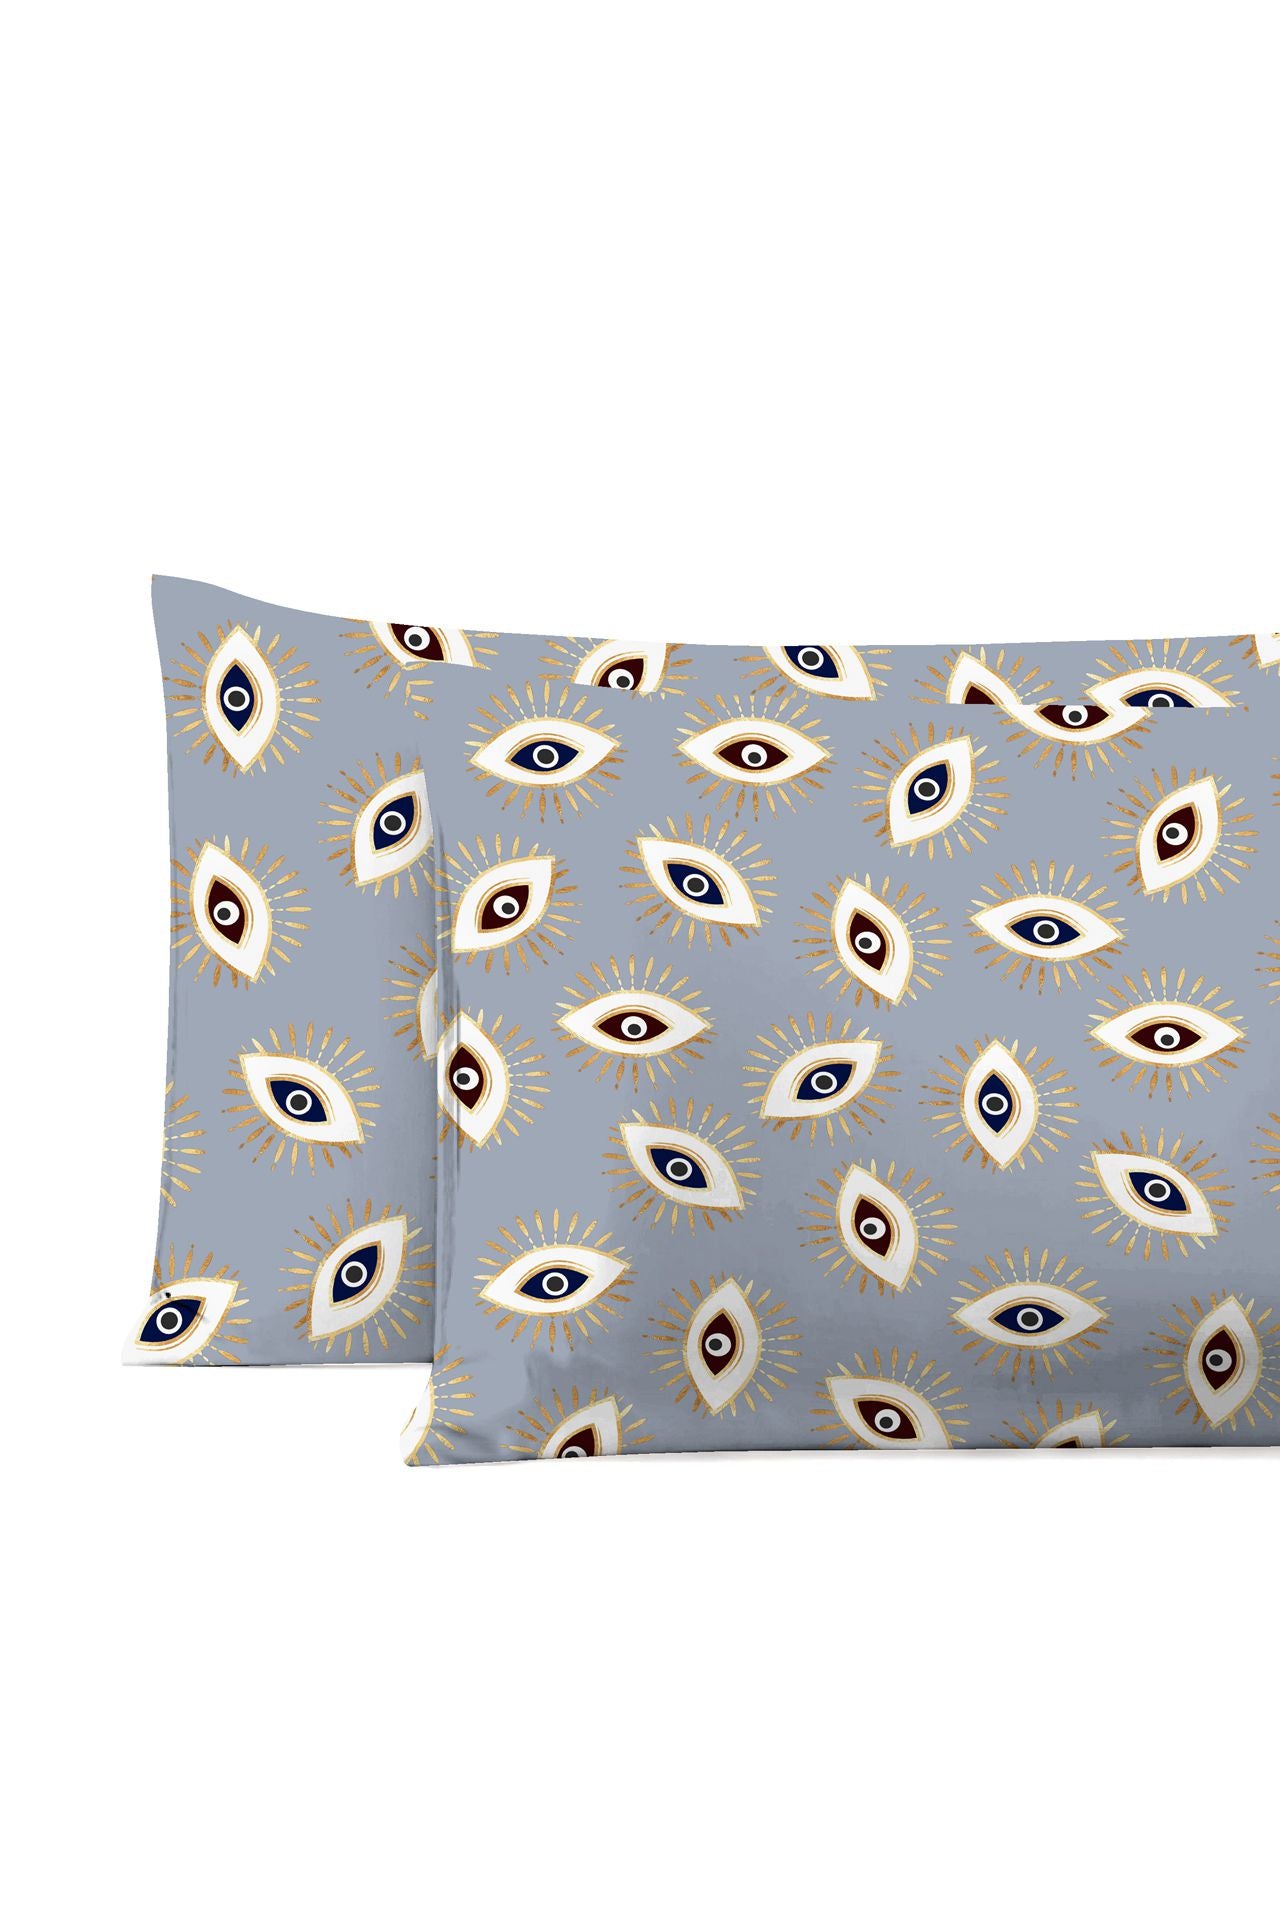 "Kyle X Shahida" "best decorative pillows" "dark grey pillow covers" "decorative pillows for bed"